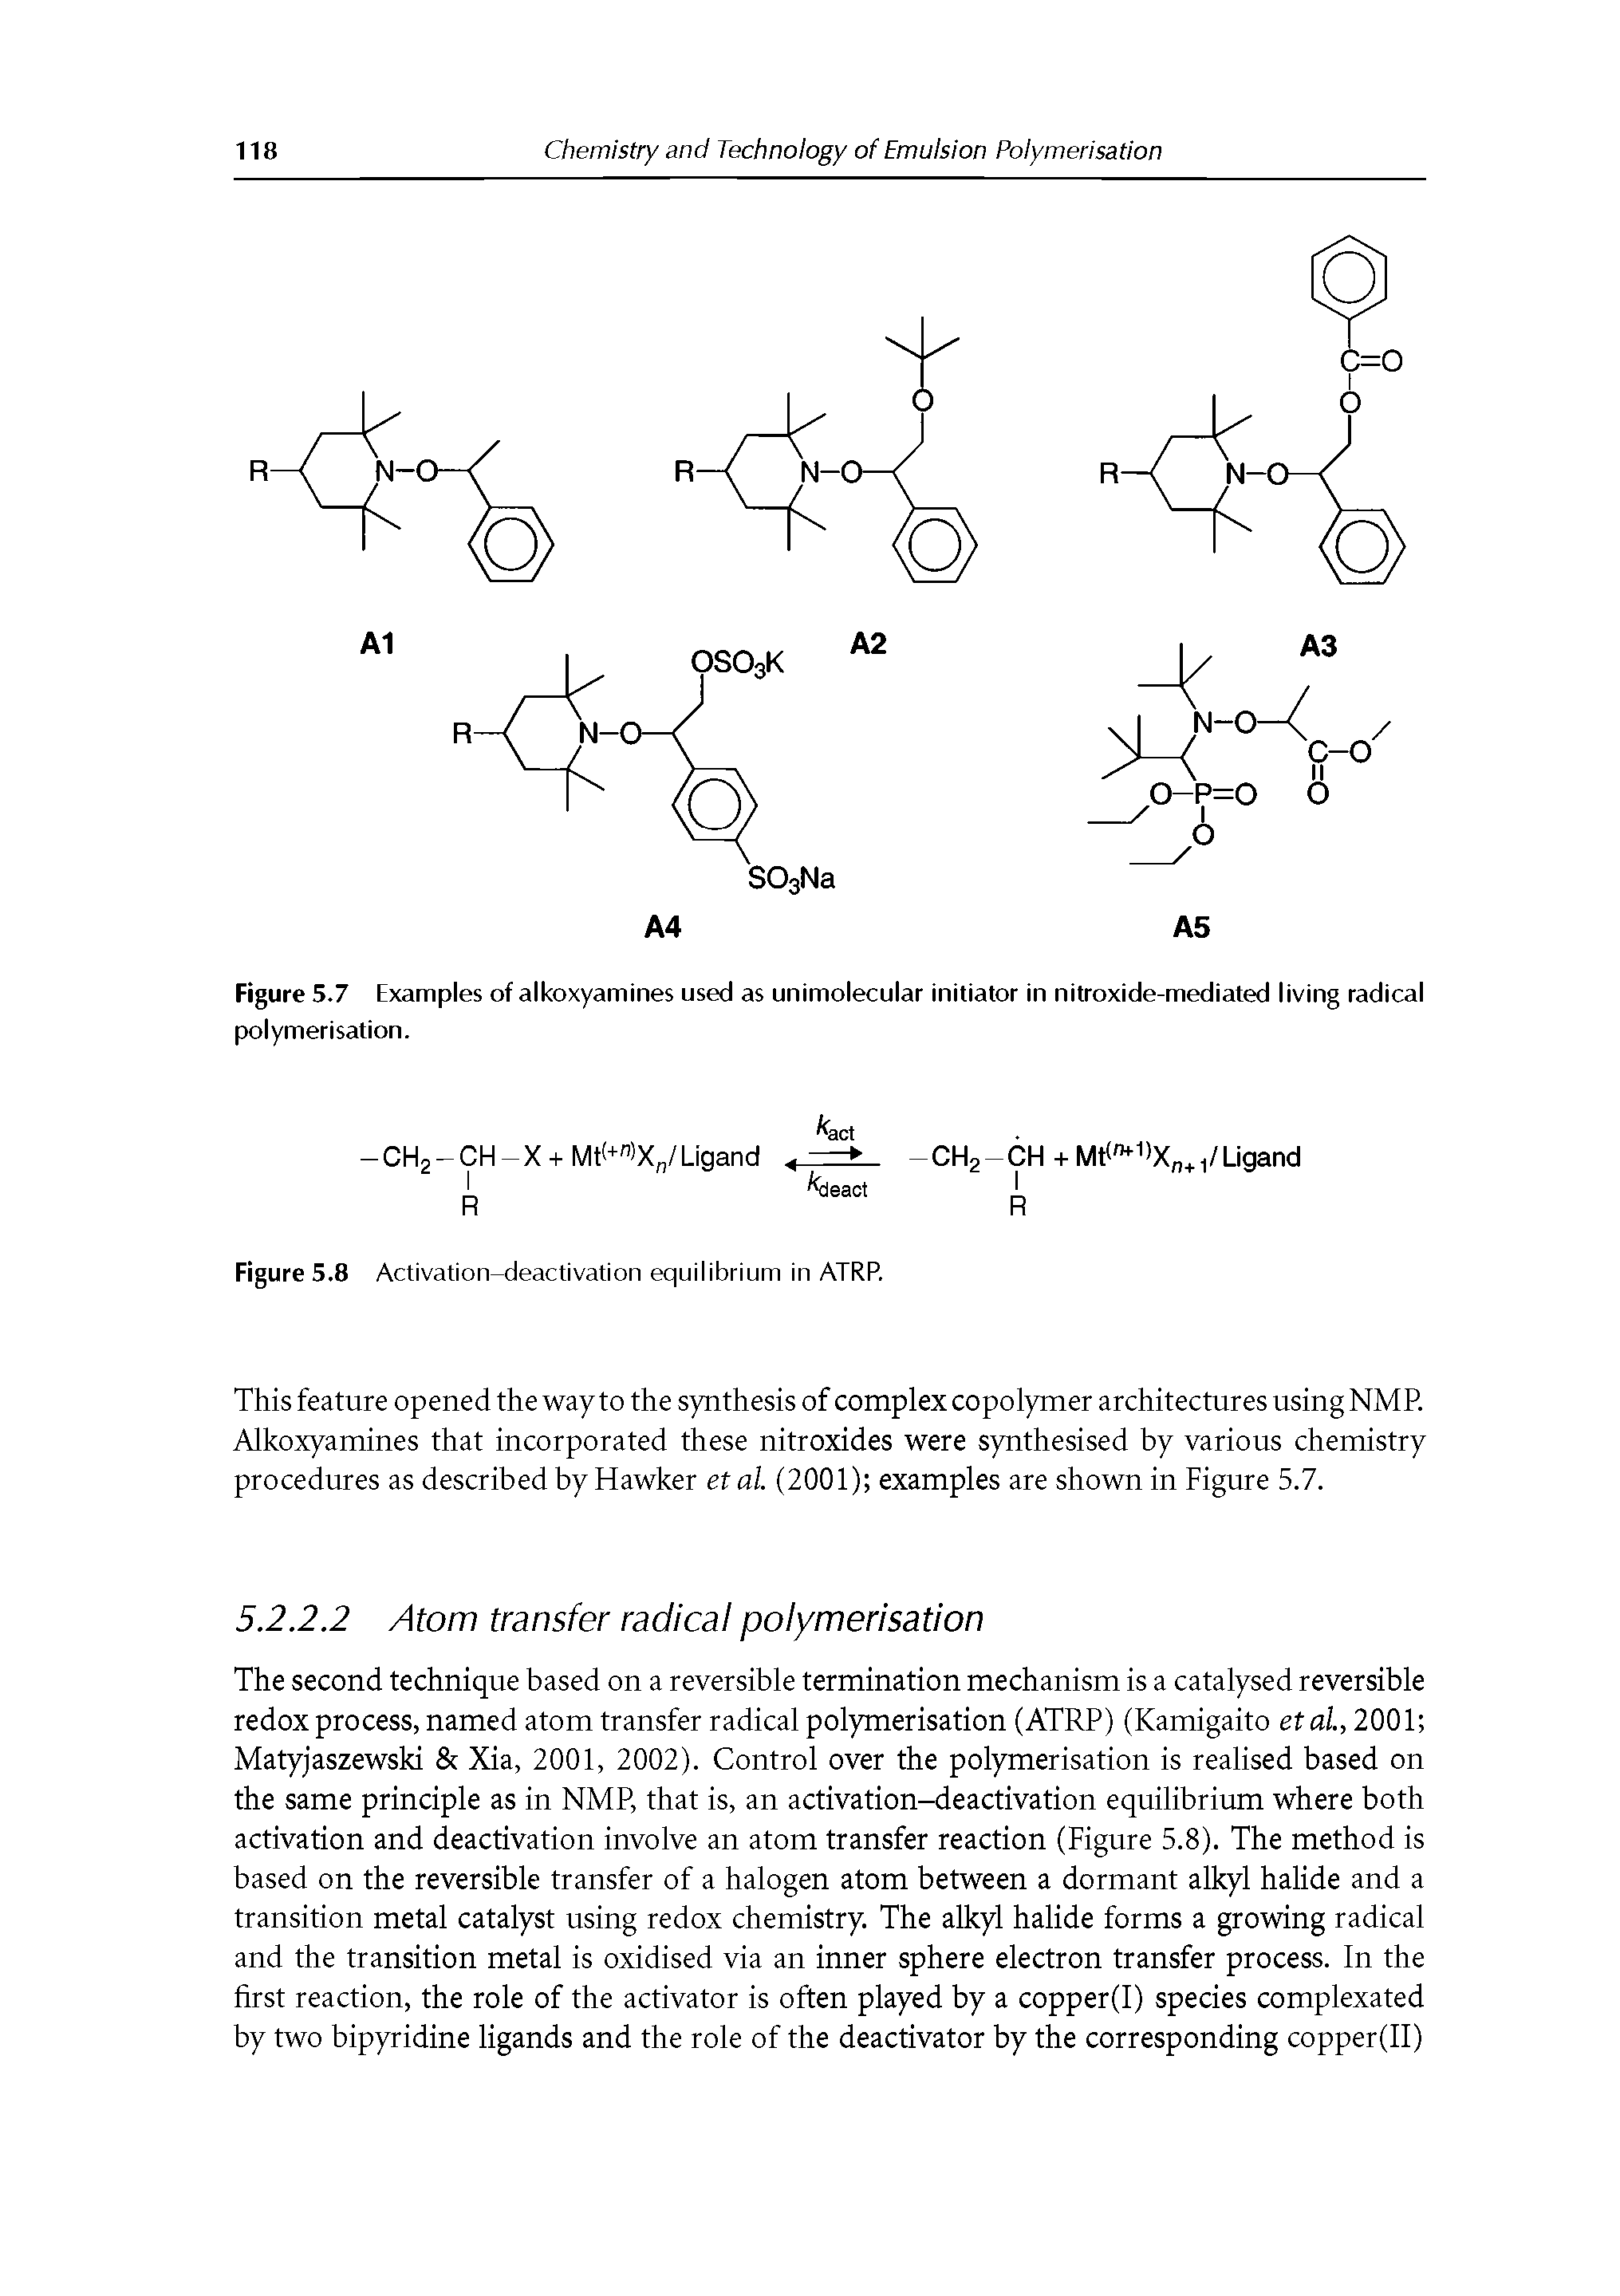 Figure 5.7 Examples of alkoxyamines used as unimolecular initiator in nitroxide-mediated living radical polymerisation.